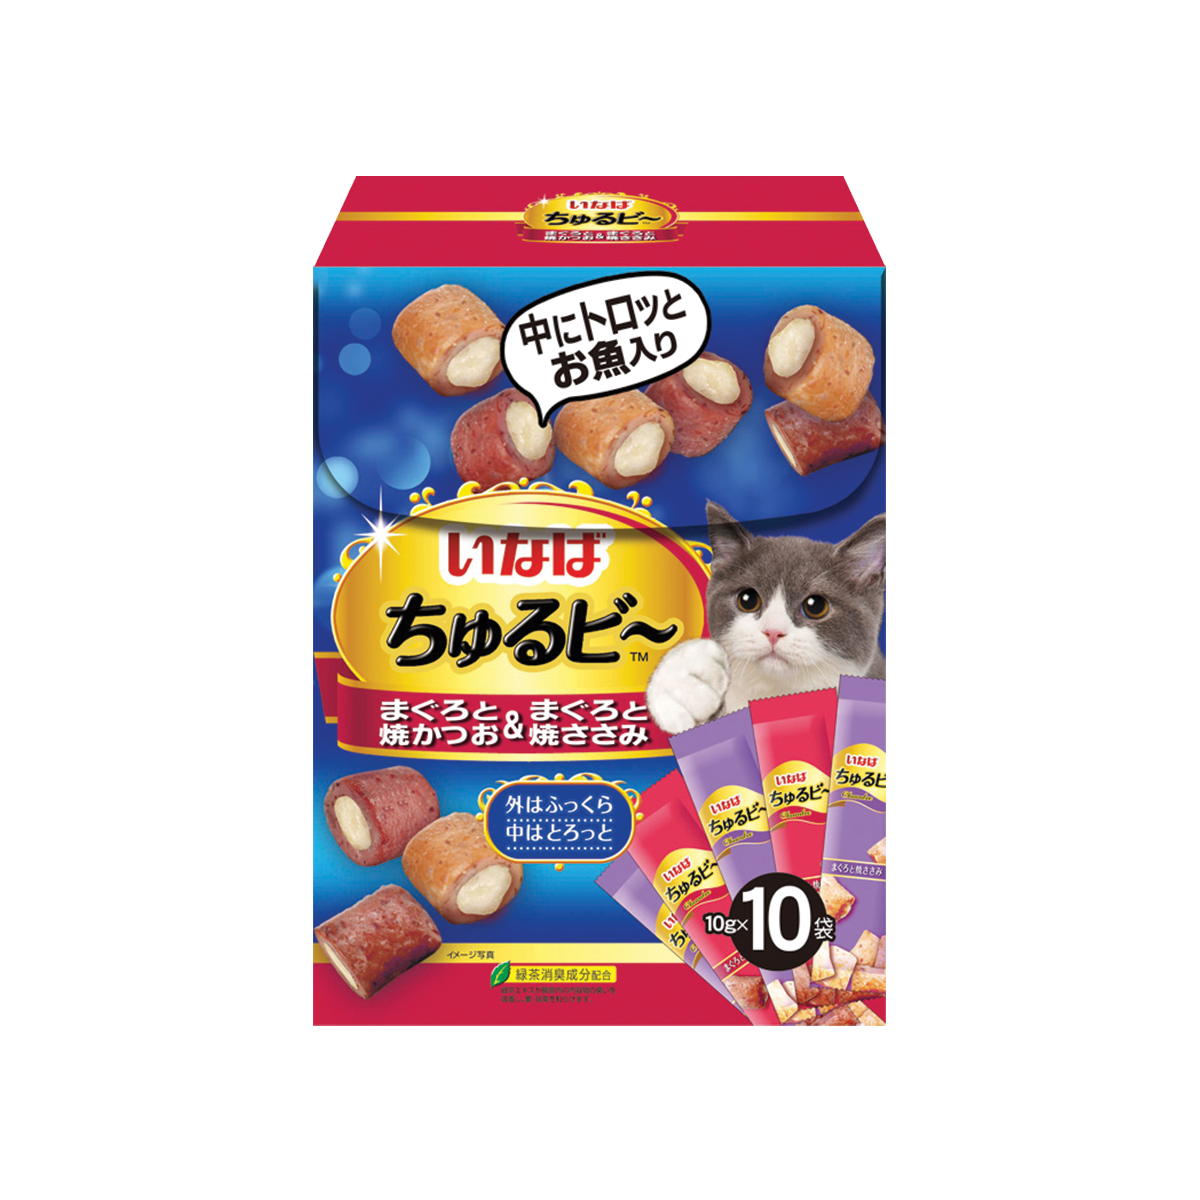 CIAO Churubee Creamy Cat Treats Mixed Flavor เชาว์ ชูหรุบี รวมรส ขนมแมวชิ้นสอดไส้ครีมแมวเลีย สูตรมากุโระและไก่ย่าง ขนาด 100 กรัม